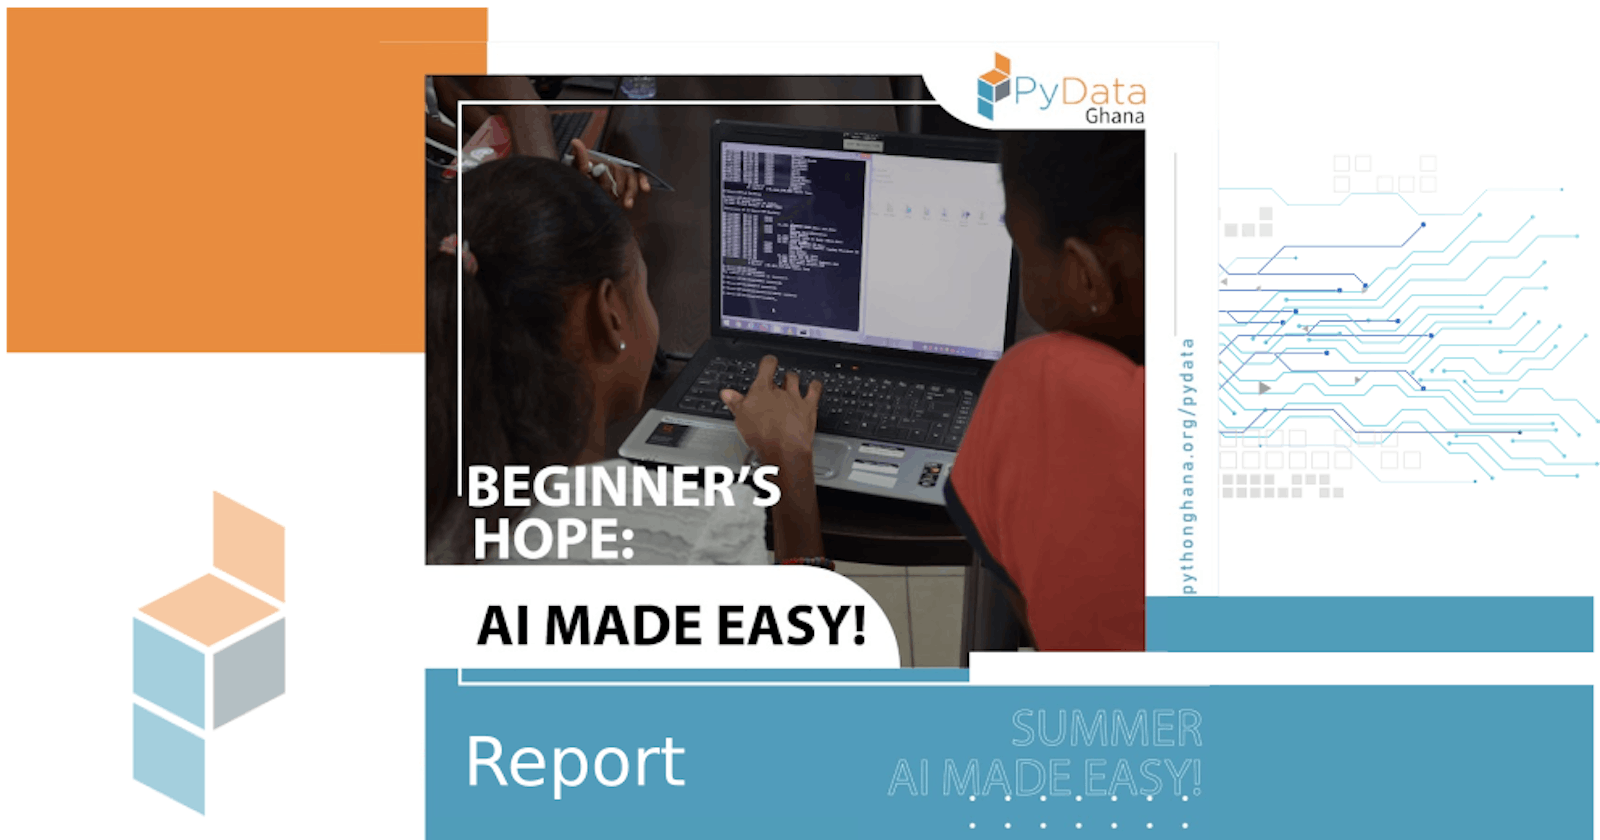 PyData Workshop: Beginner's Hope: AI Made Easy - Report